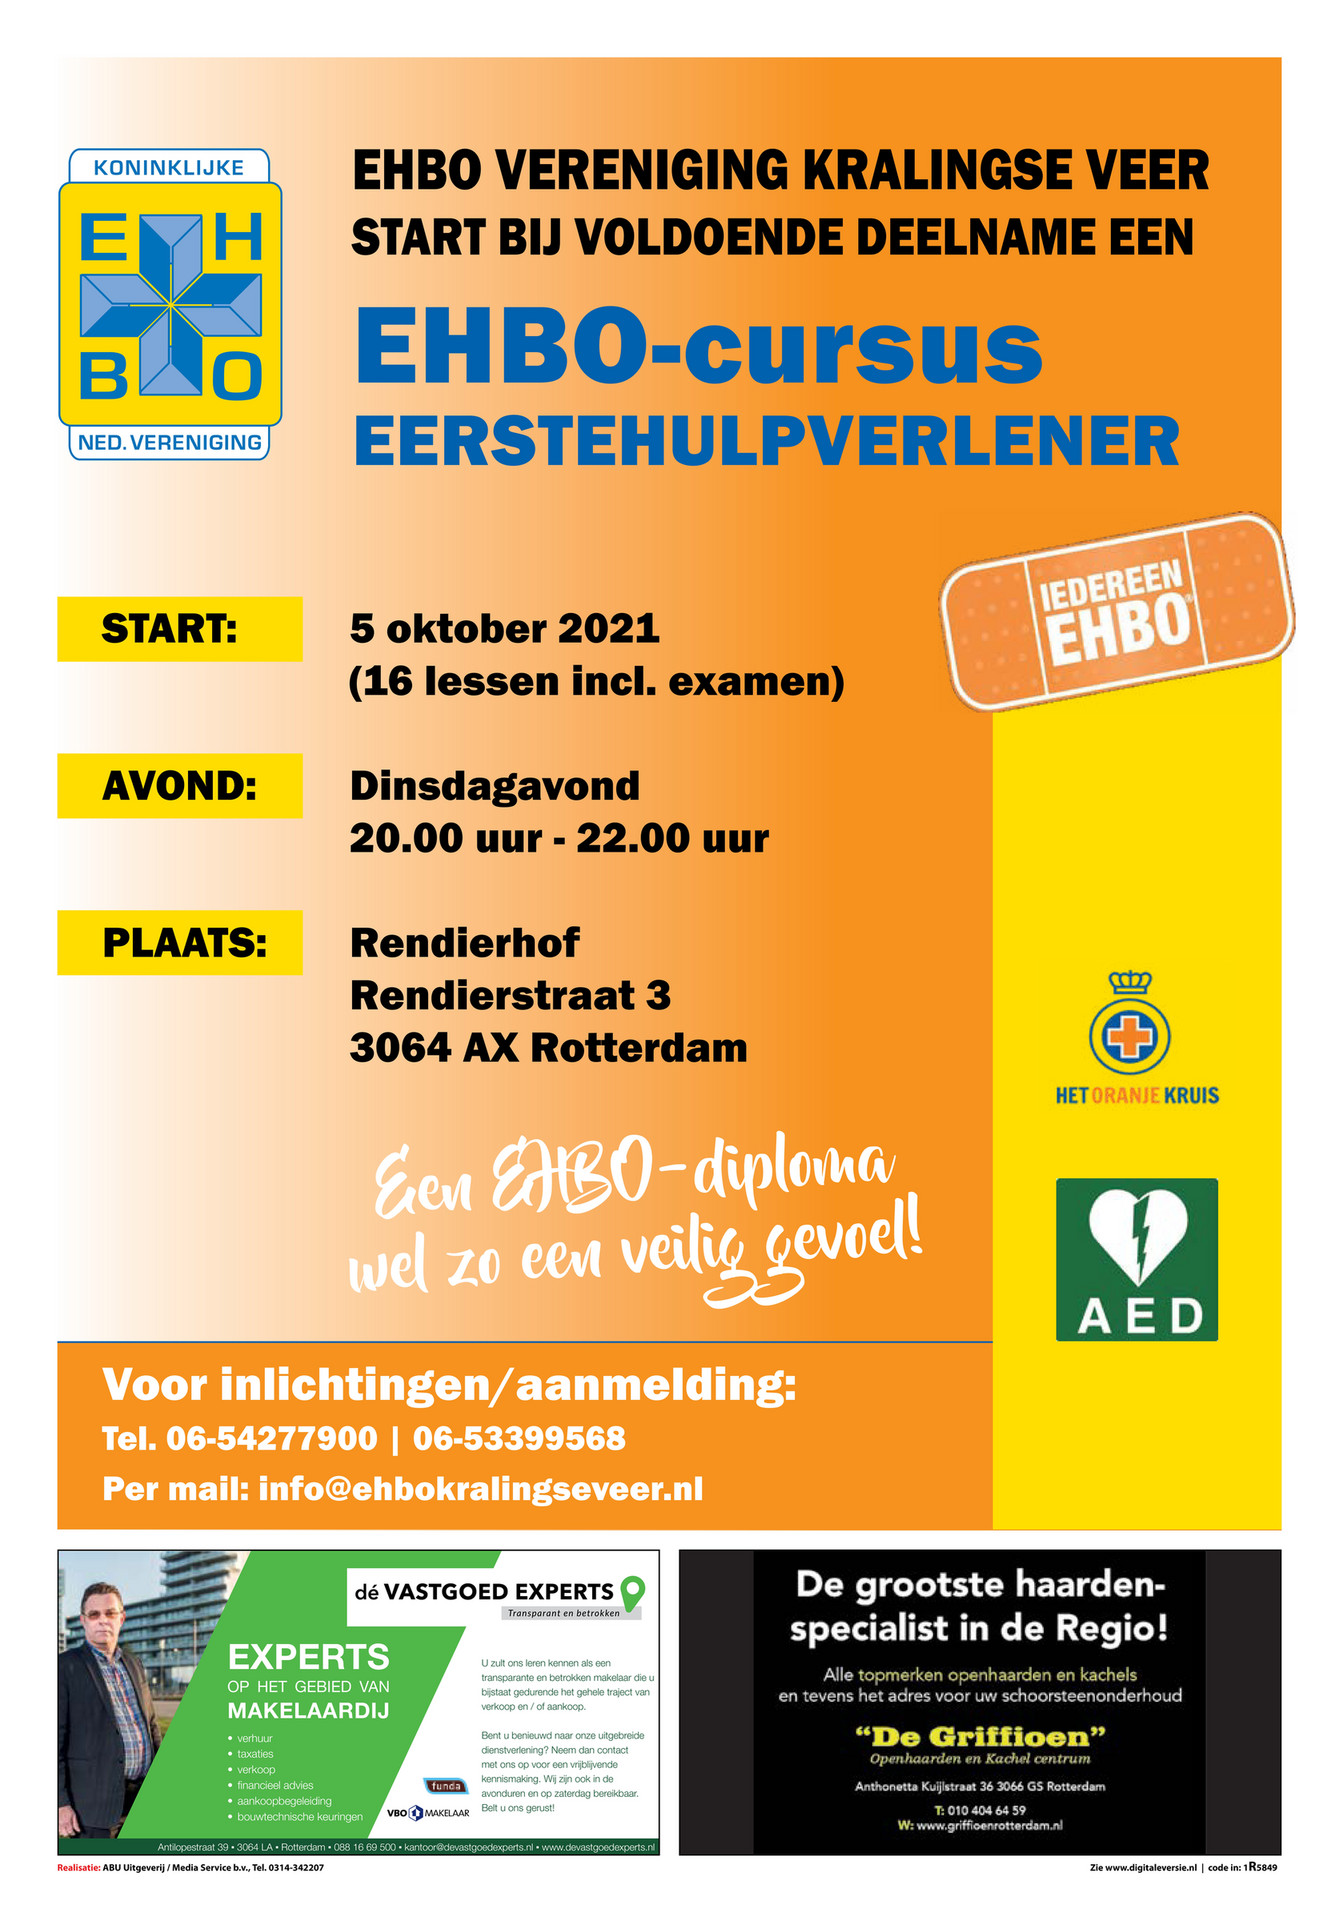 Spreek luid Verst Vrijgevig Digitaleversie - Rotterdam EHBO 2021 Poster 1R5849 - Pagina 1 - Created  with Publitas.com